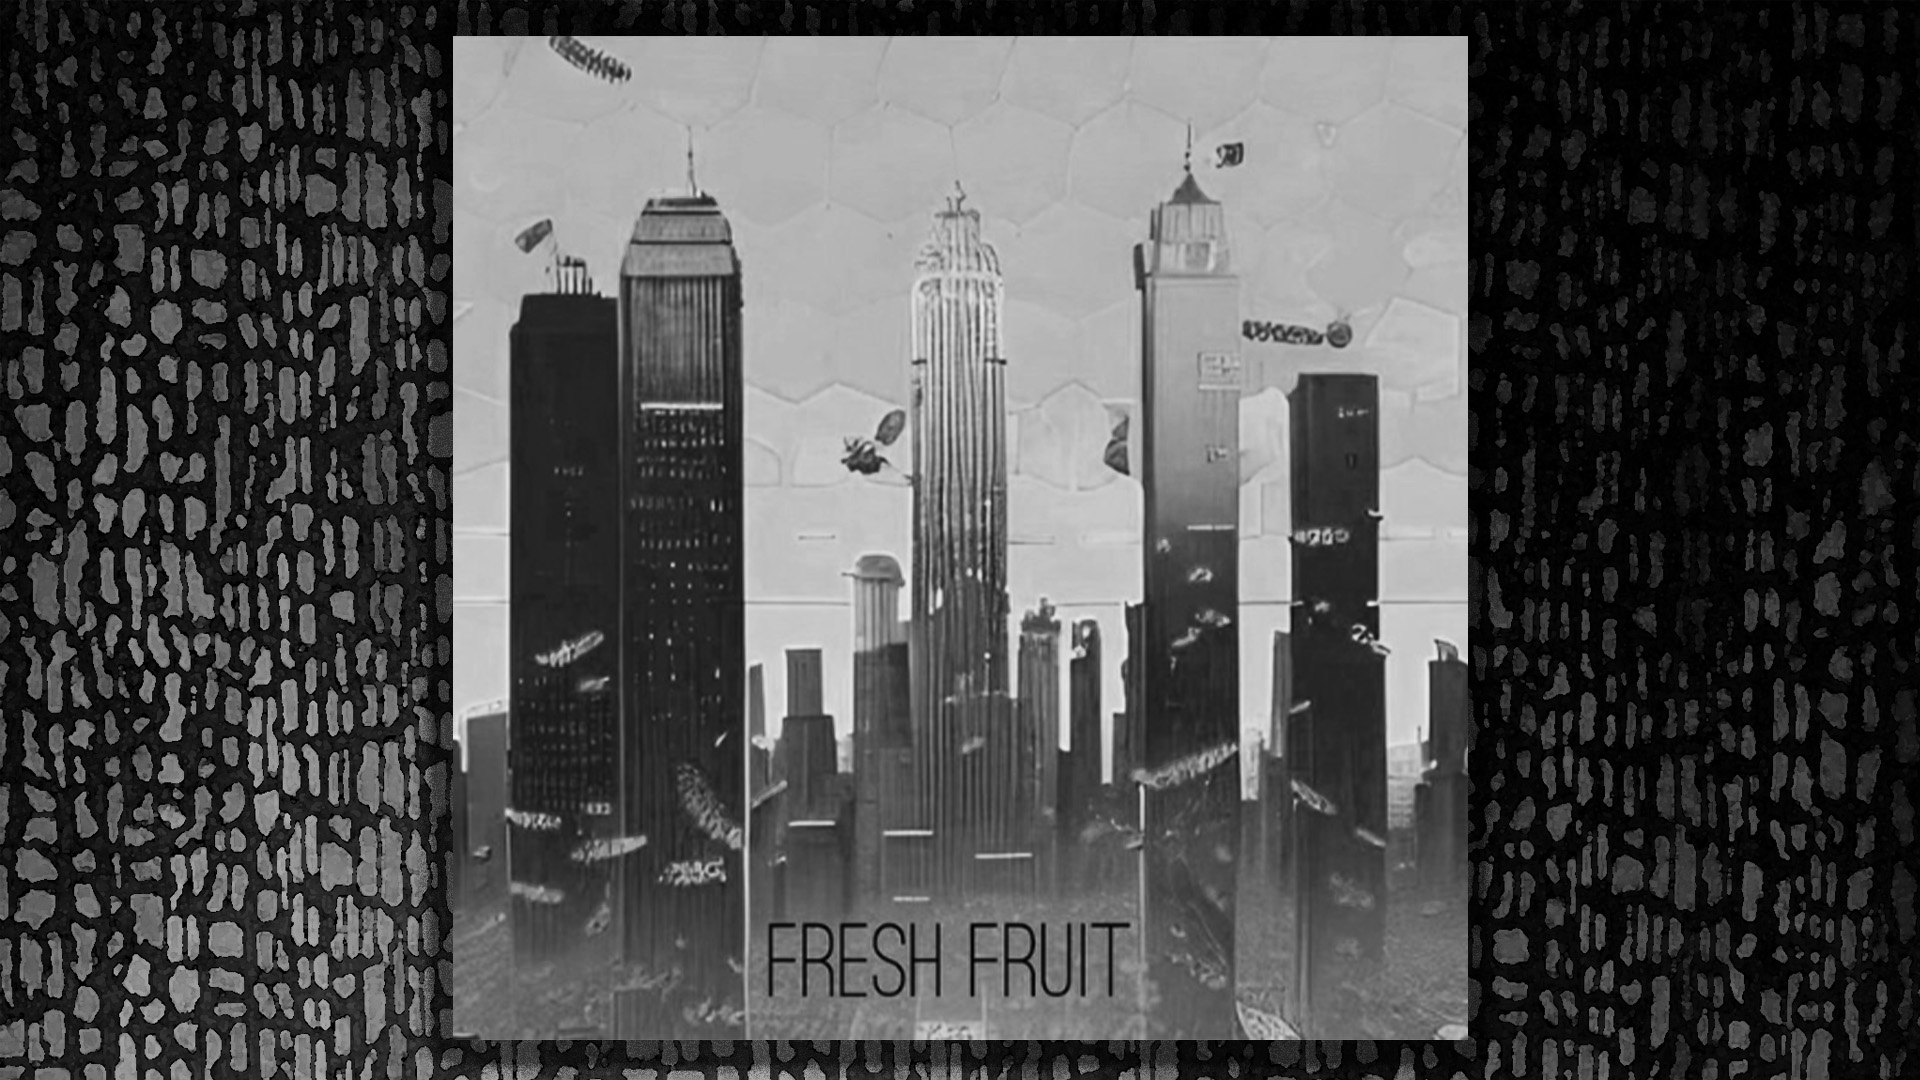 Fresh Fruit, Urban Honey